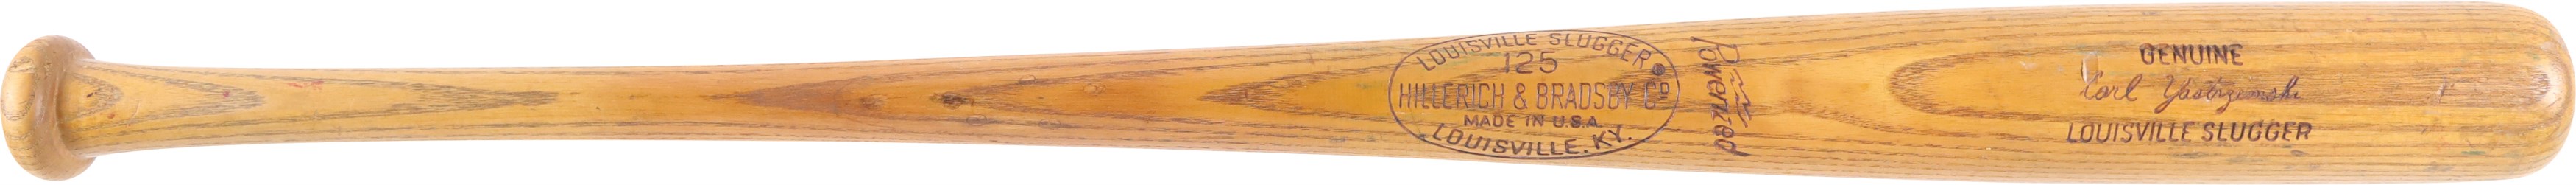 Baseball Equipment - 1967-68 Carl Yastrzemski Boston Red Sox Game Used Bat